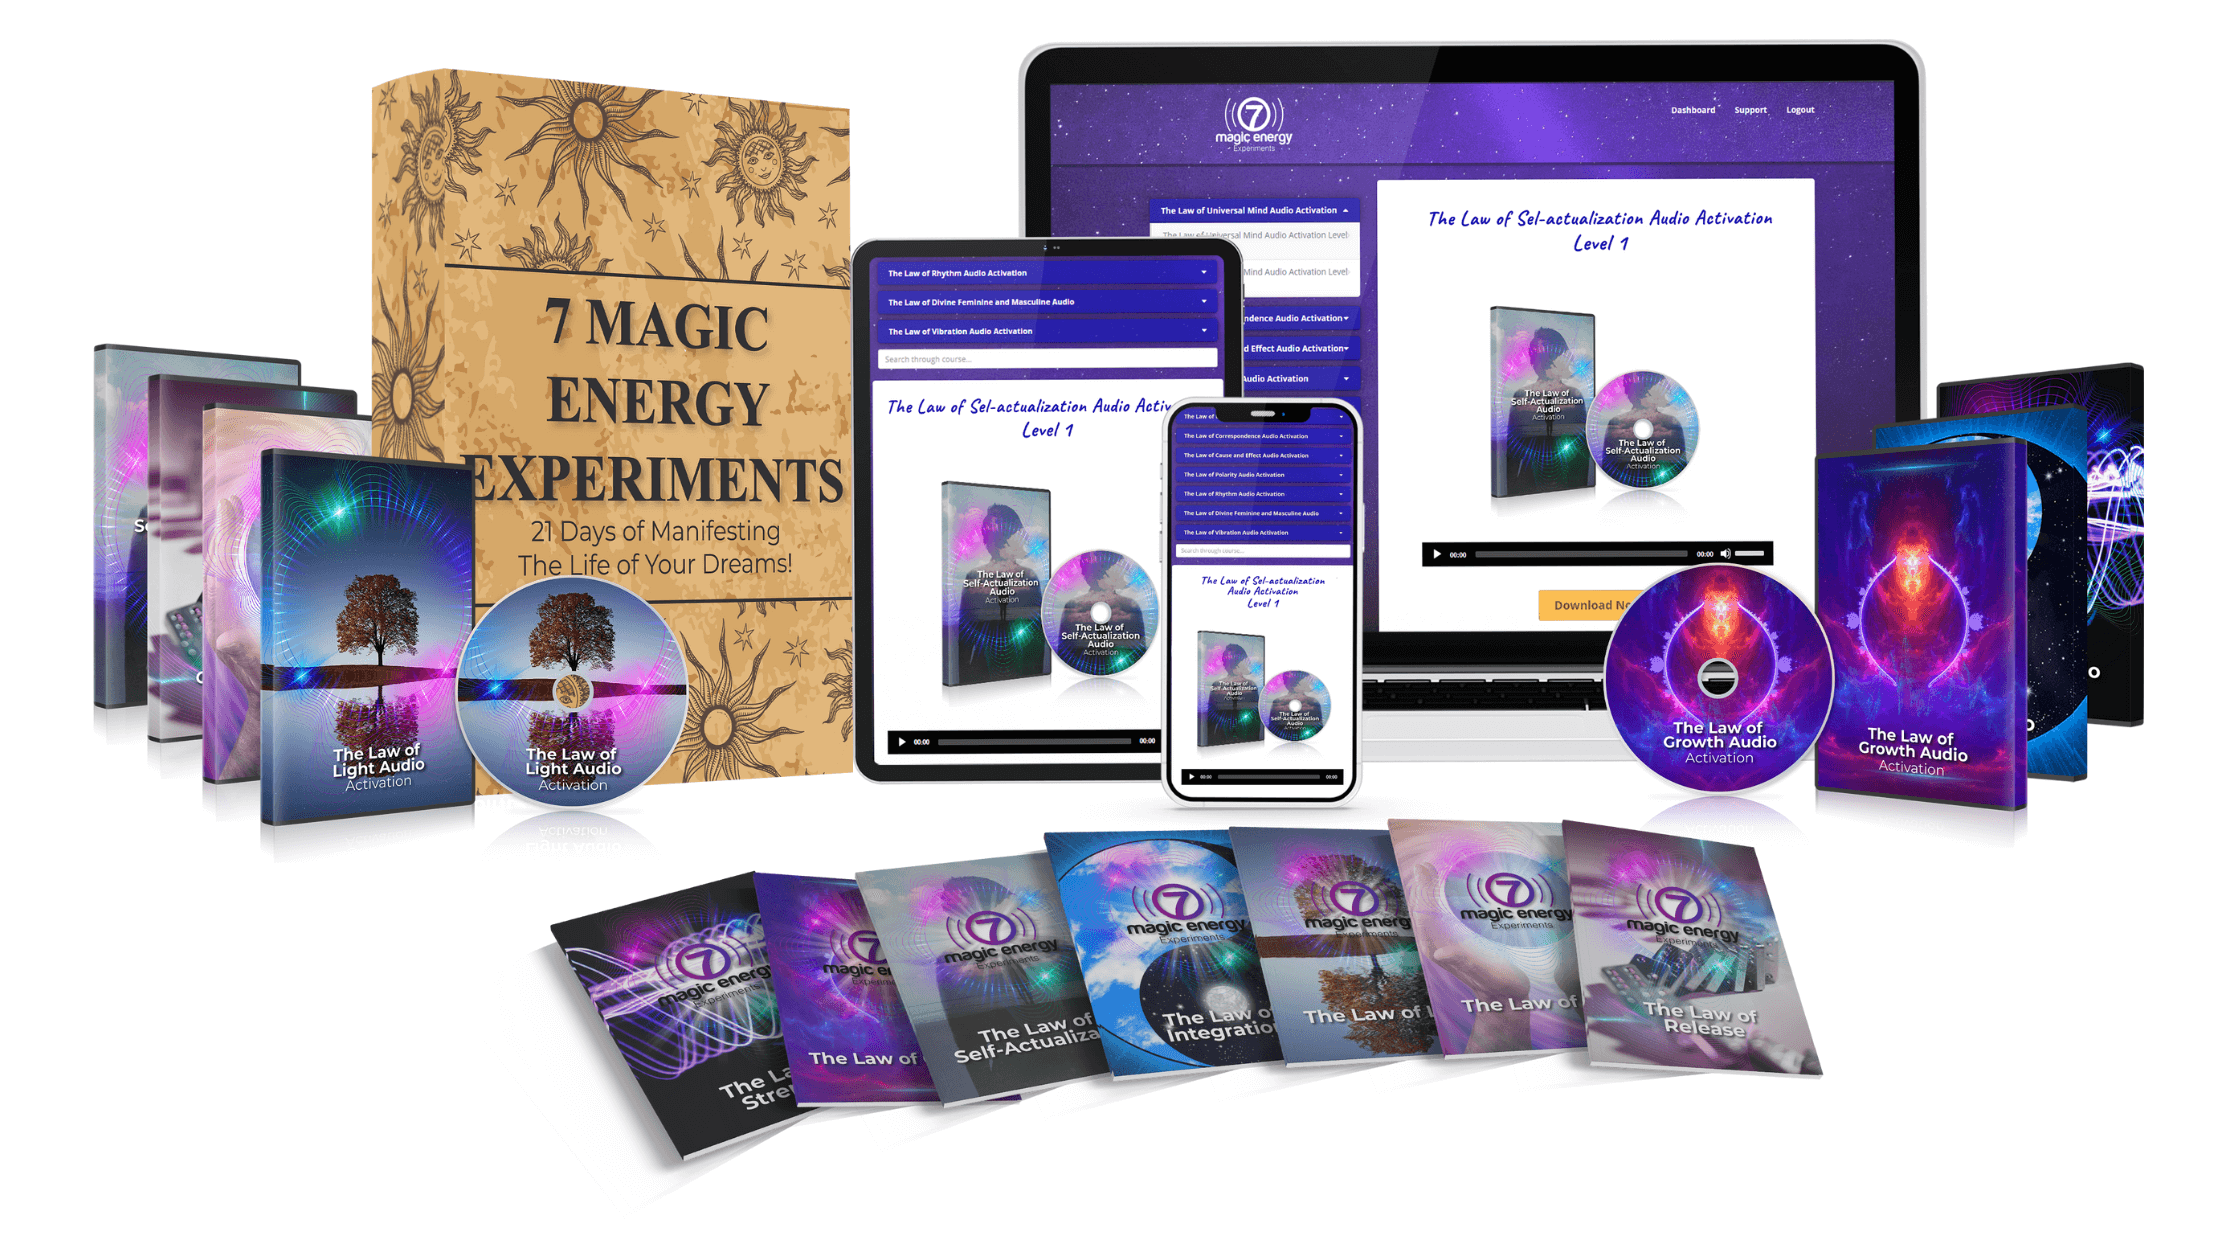 7 Magic Energy Experiments Reviews